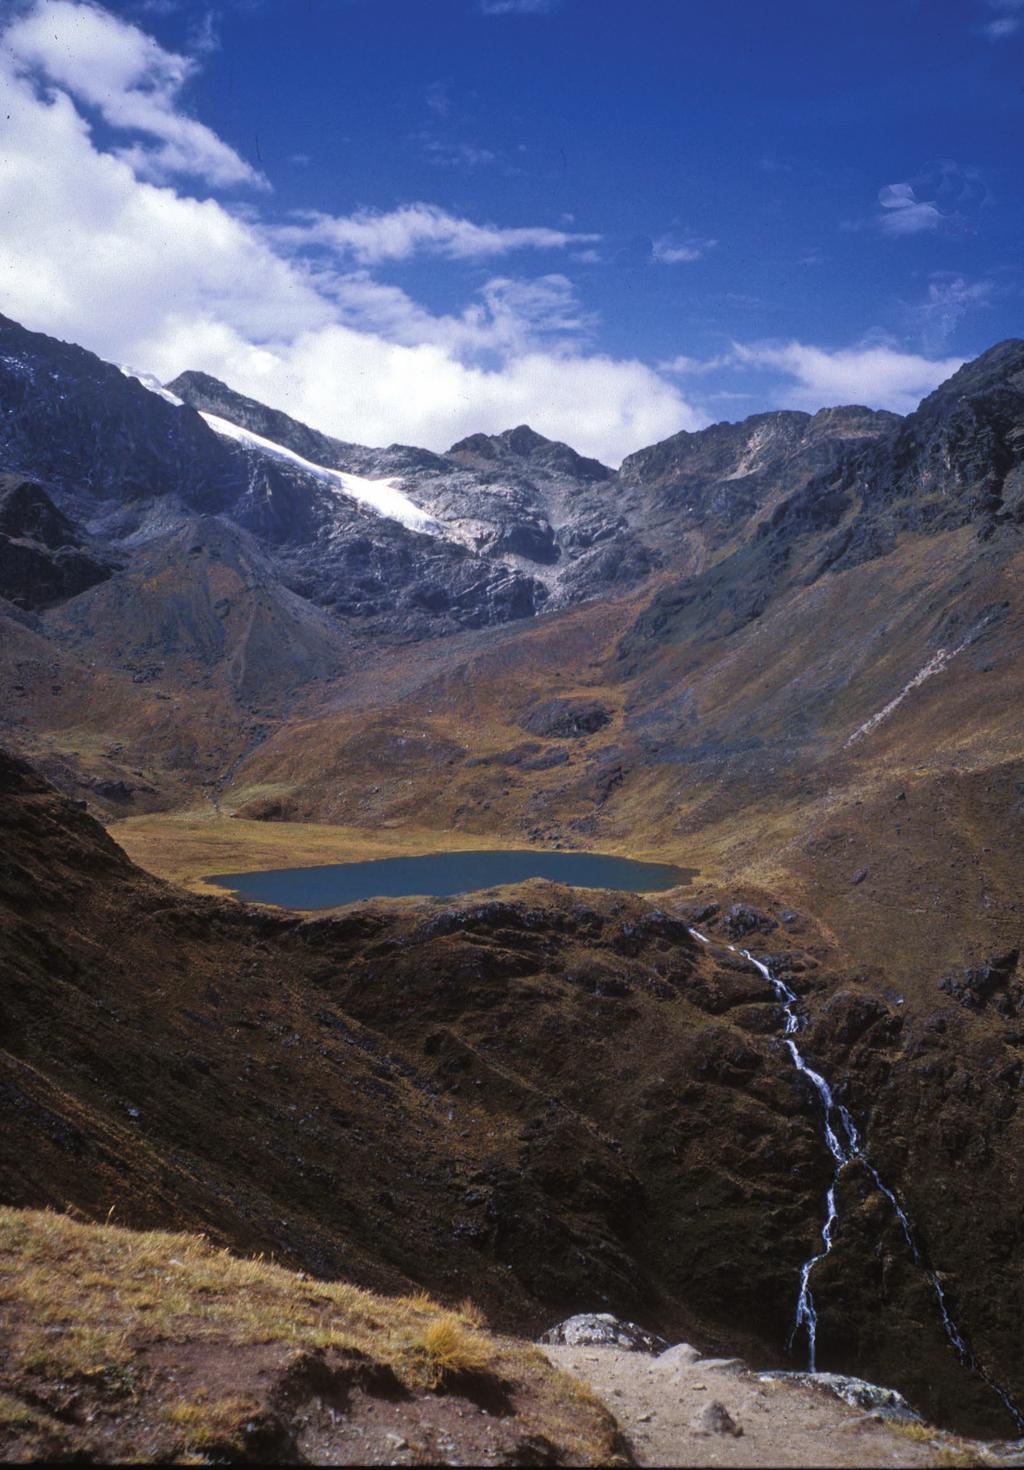 162 The Alpine Journal 2009 148. Cordillera Huaytapallana: south end of the range, with Laguna Carhuacocha.